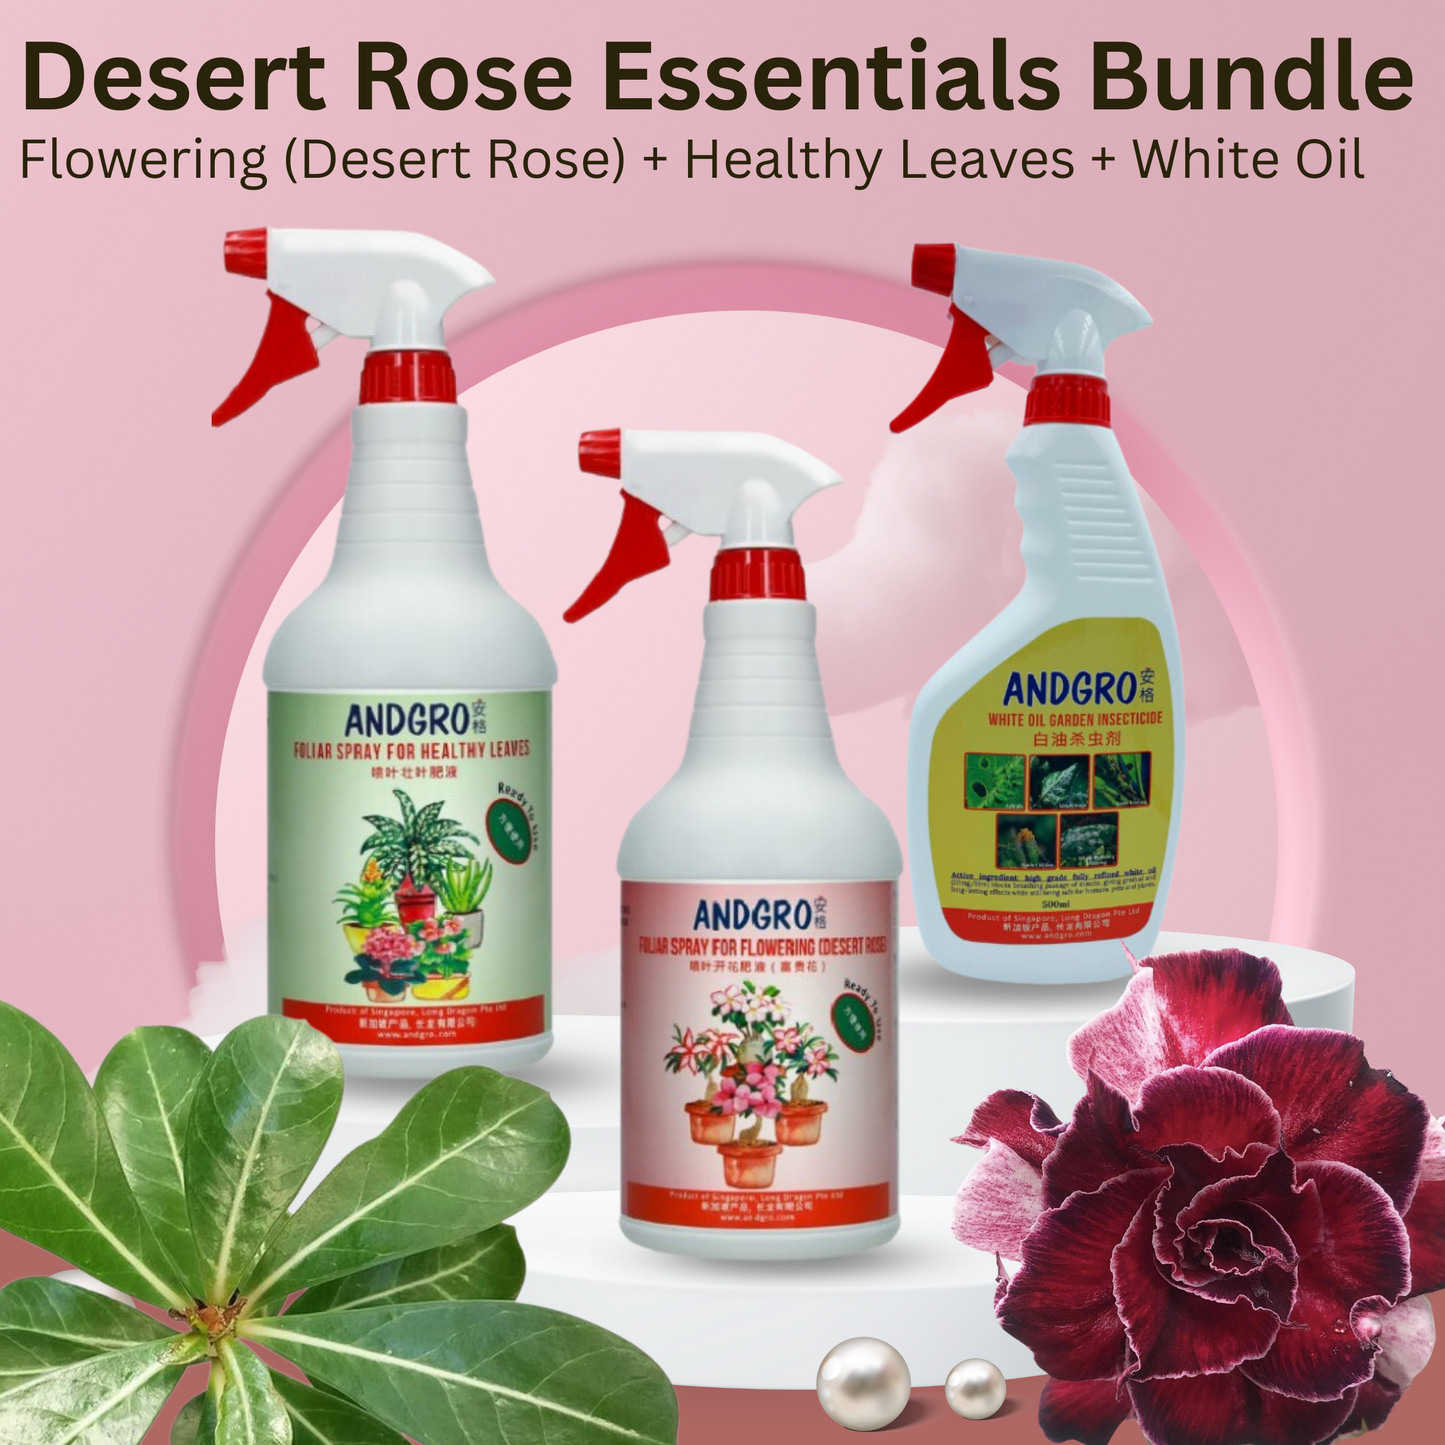 Spray for Flowering (Desert Rose) & Healthy Leaves & White Oil insecticide